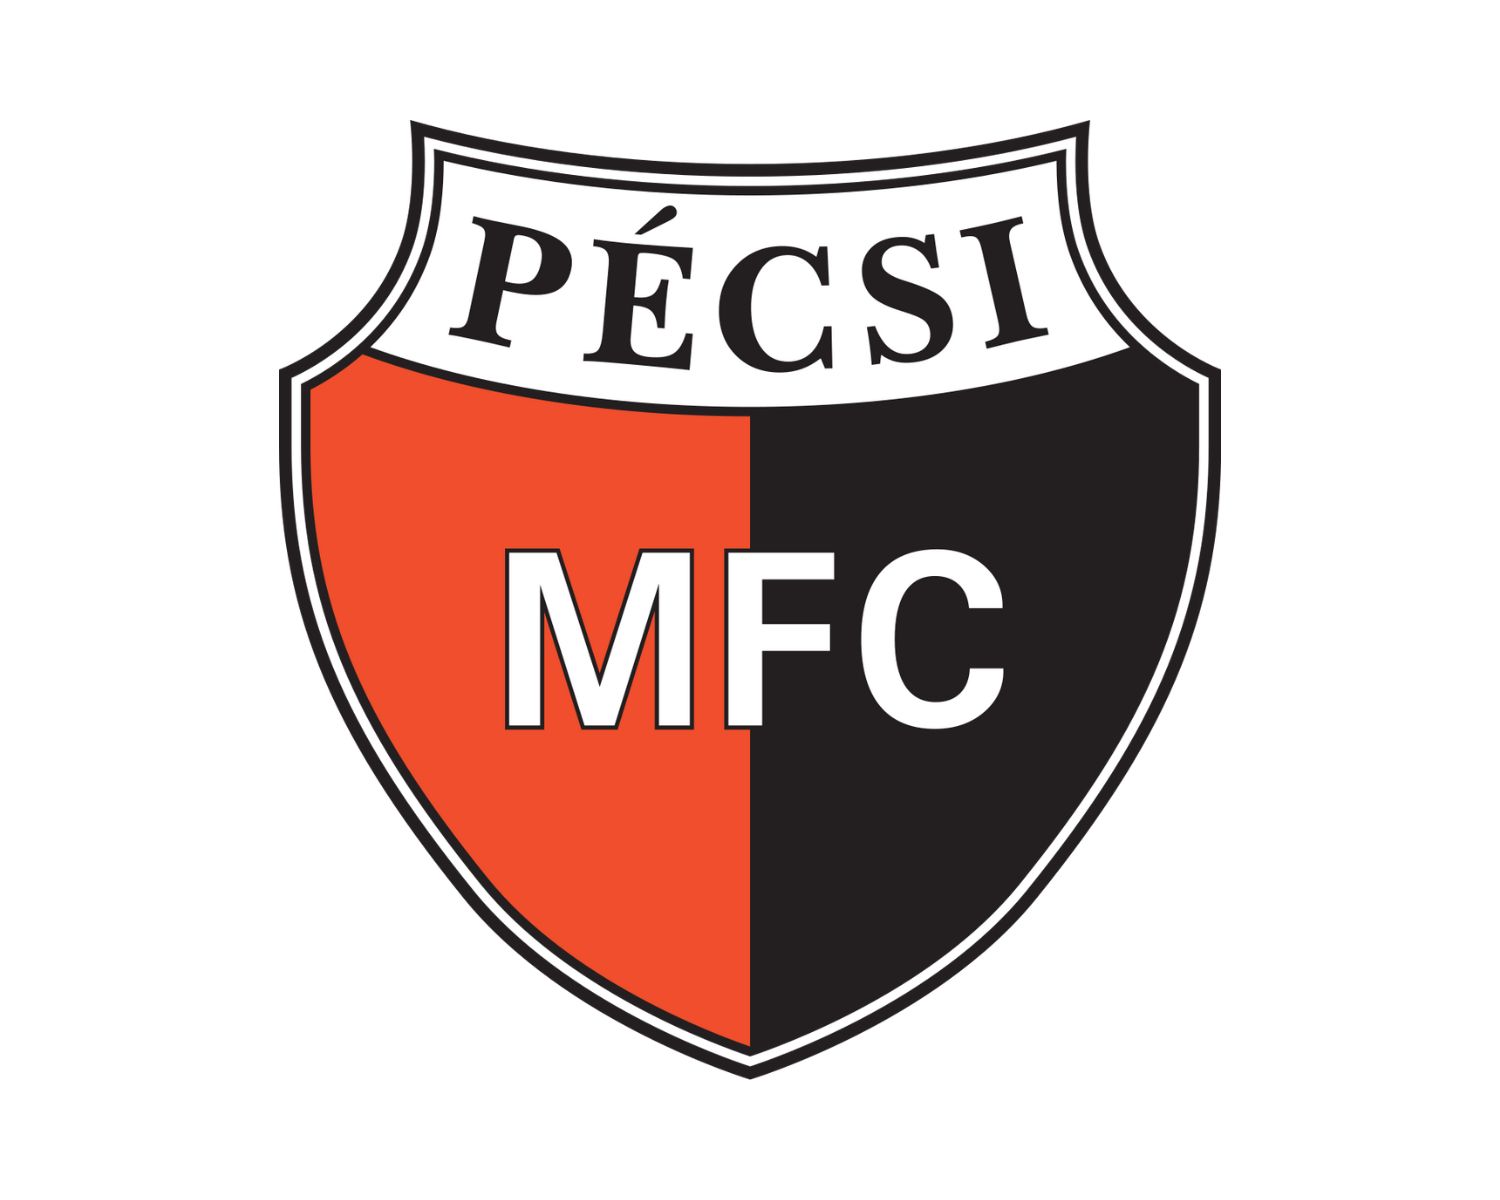 pecsi-mfc-13-football-club-facts